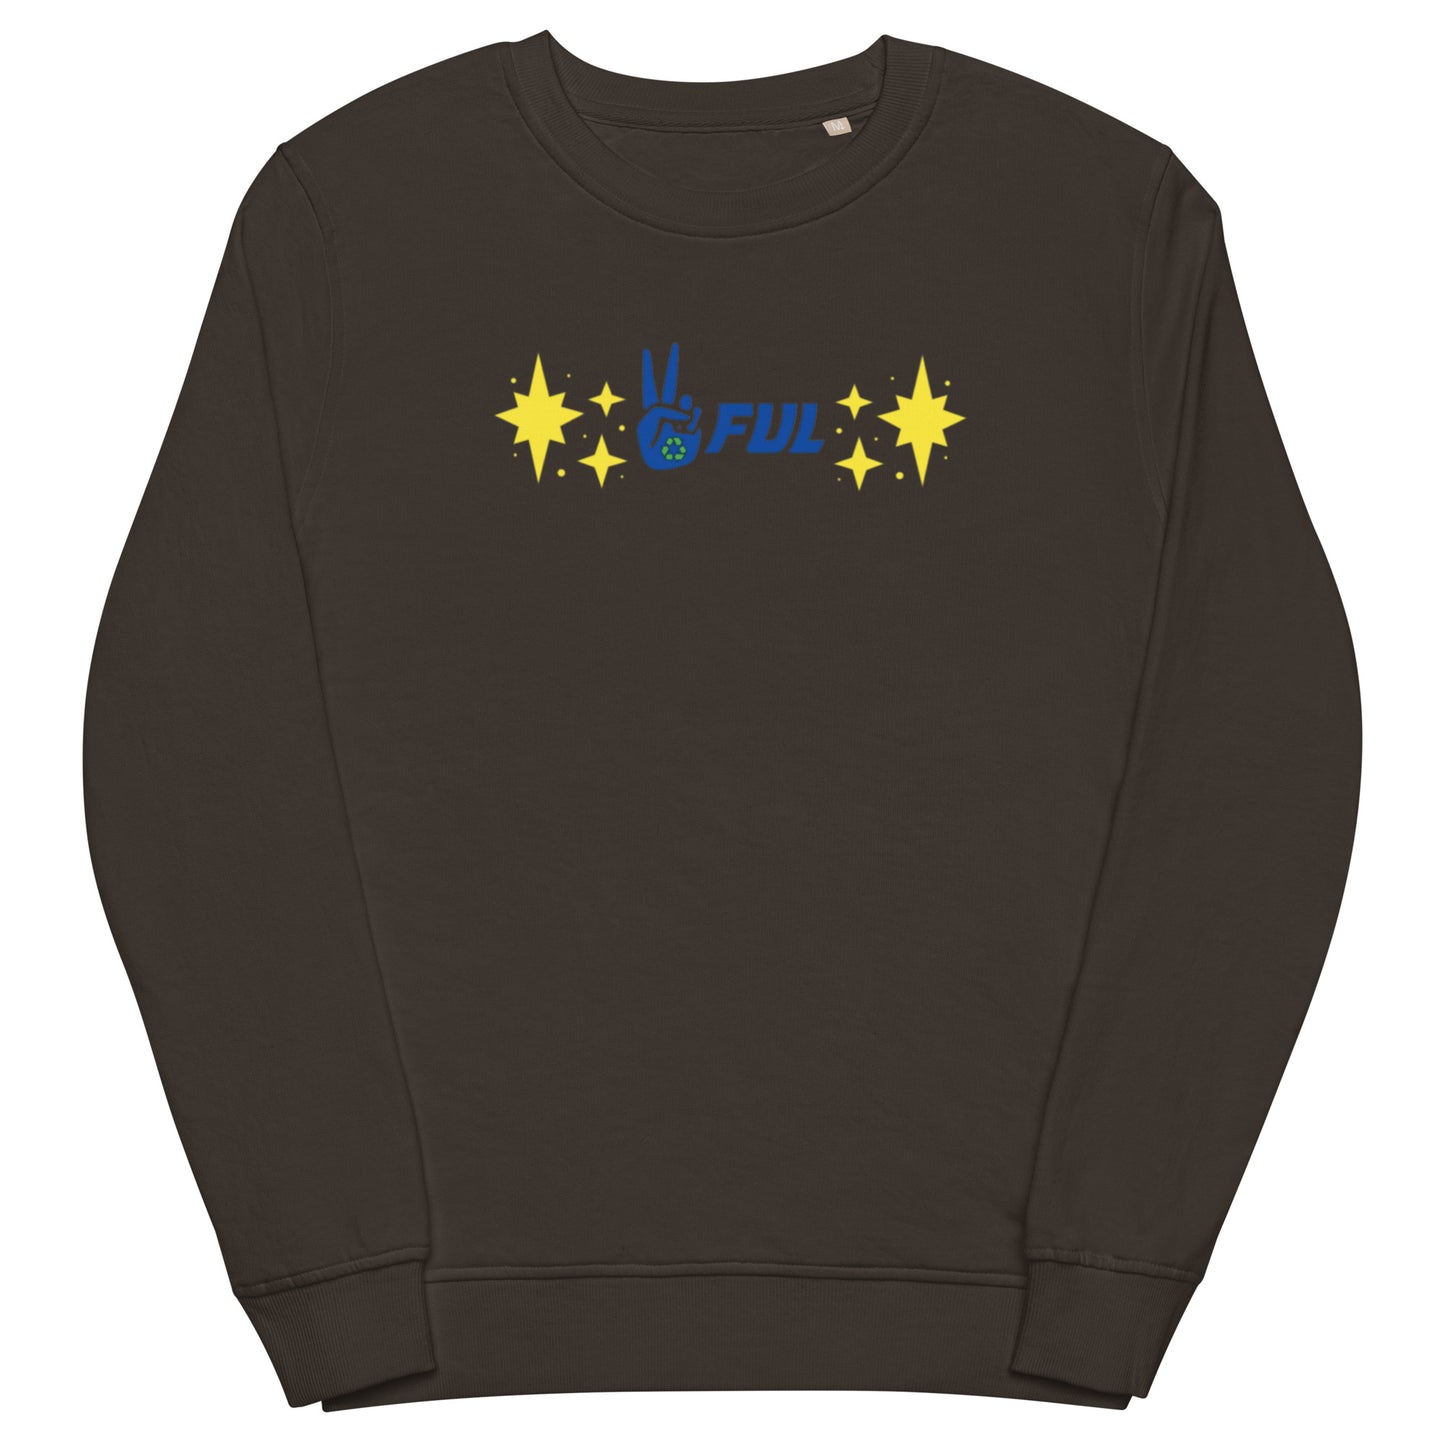 Unisex organic Peaceful Galactic Star sweatshirt